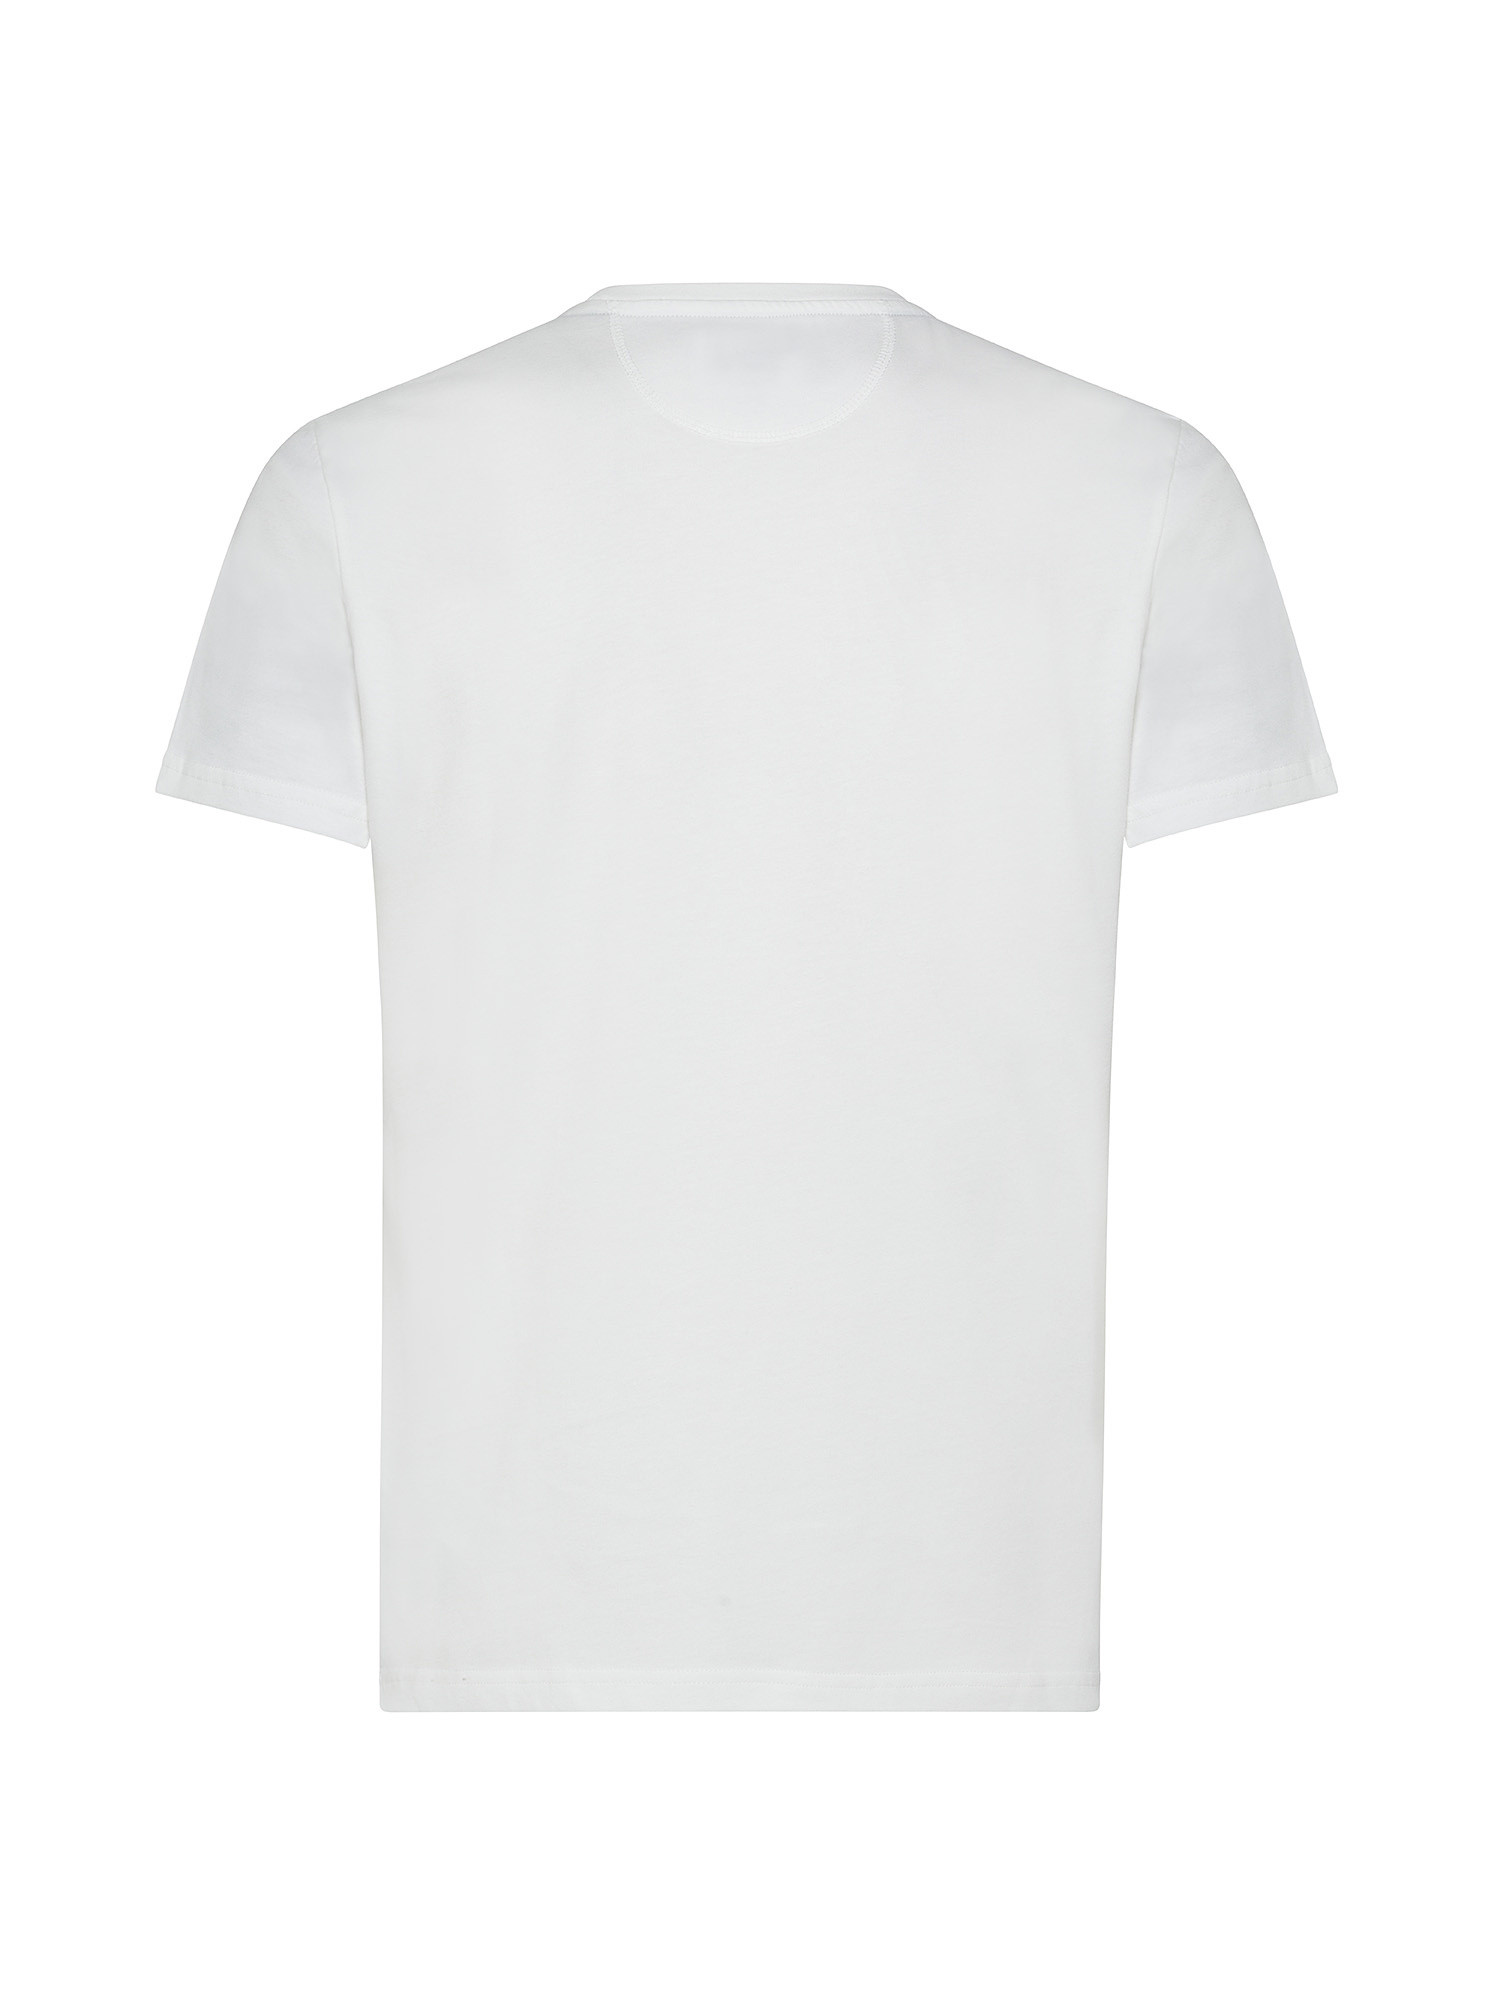 La Martina - Regular fit cotton T-shirt, White, large image number 1